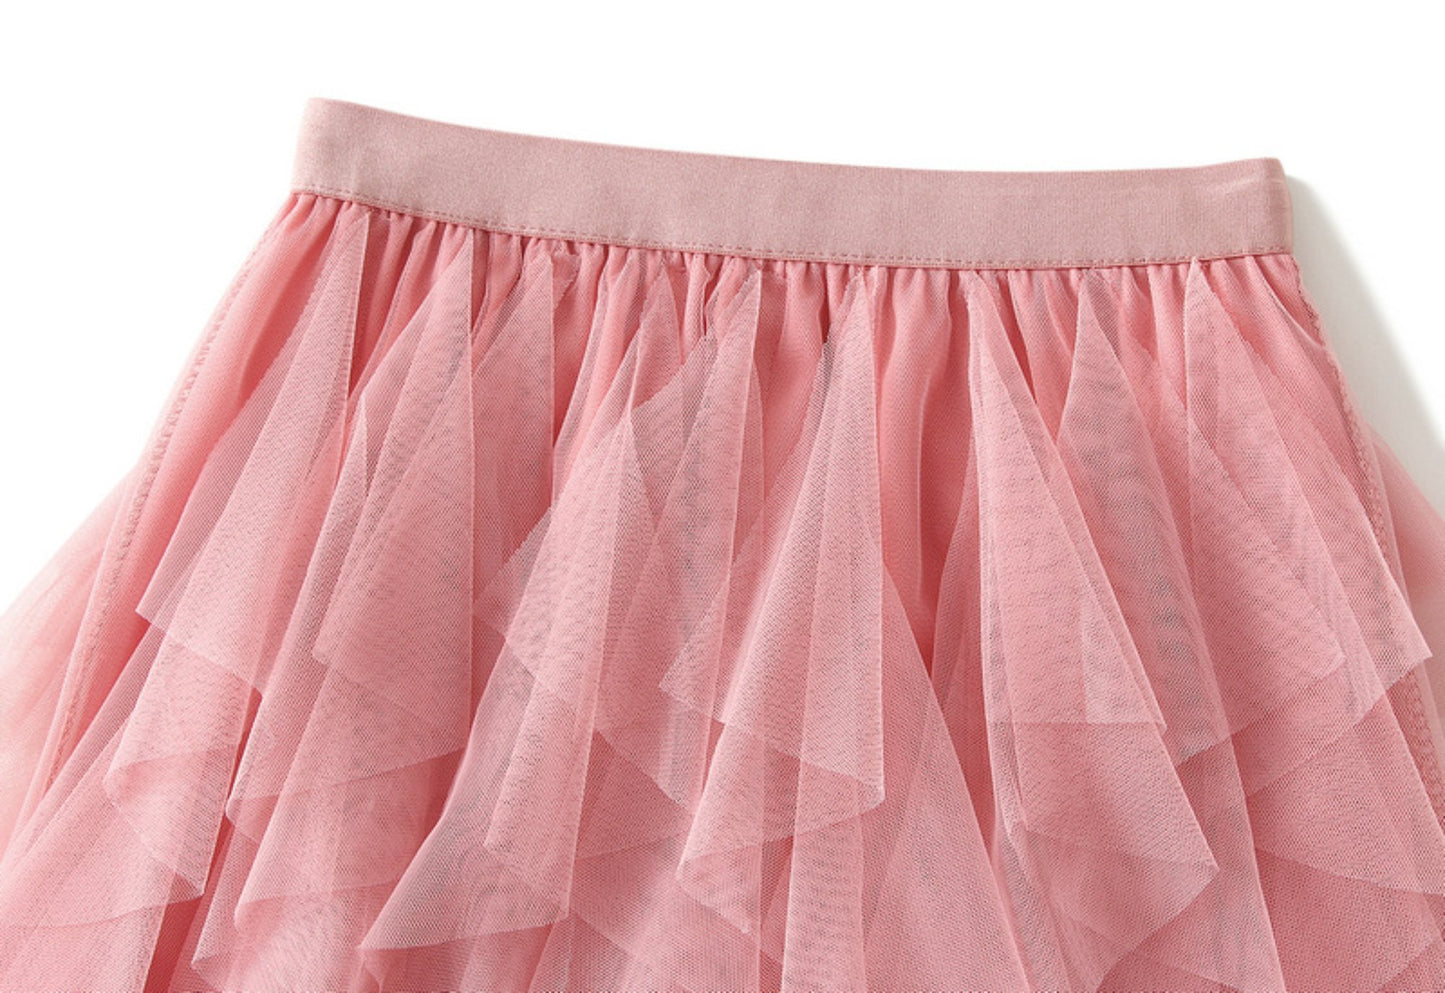 Fairy Mini Short Tutu Skirt